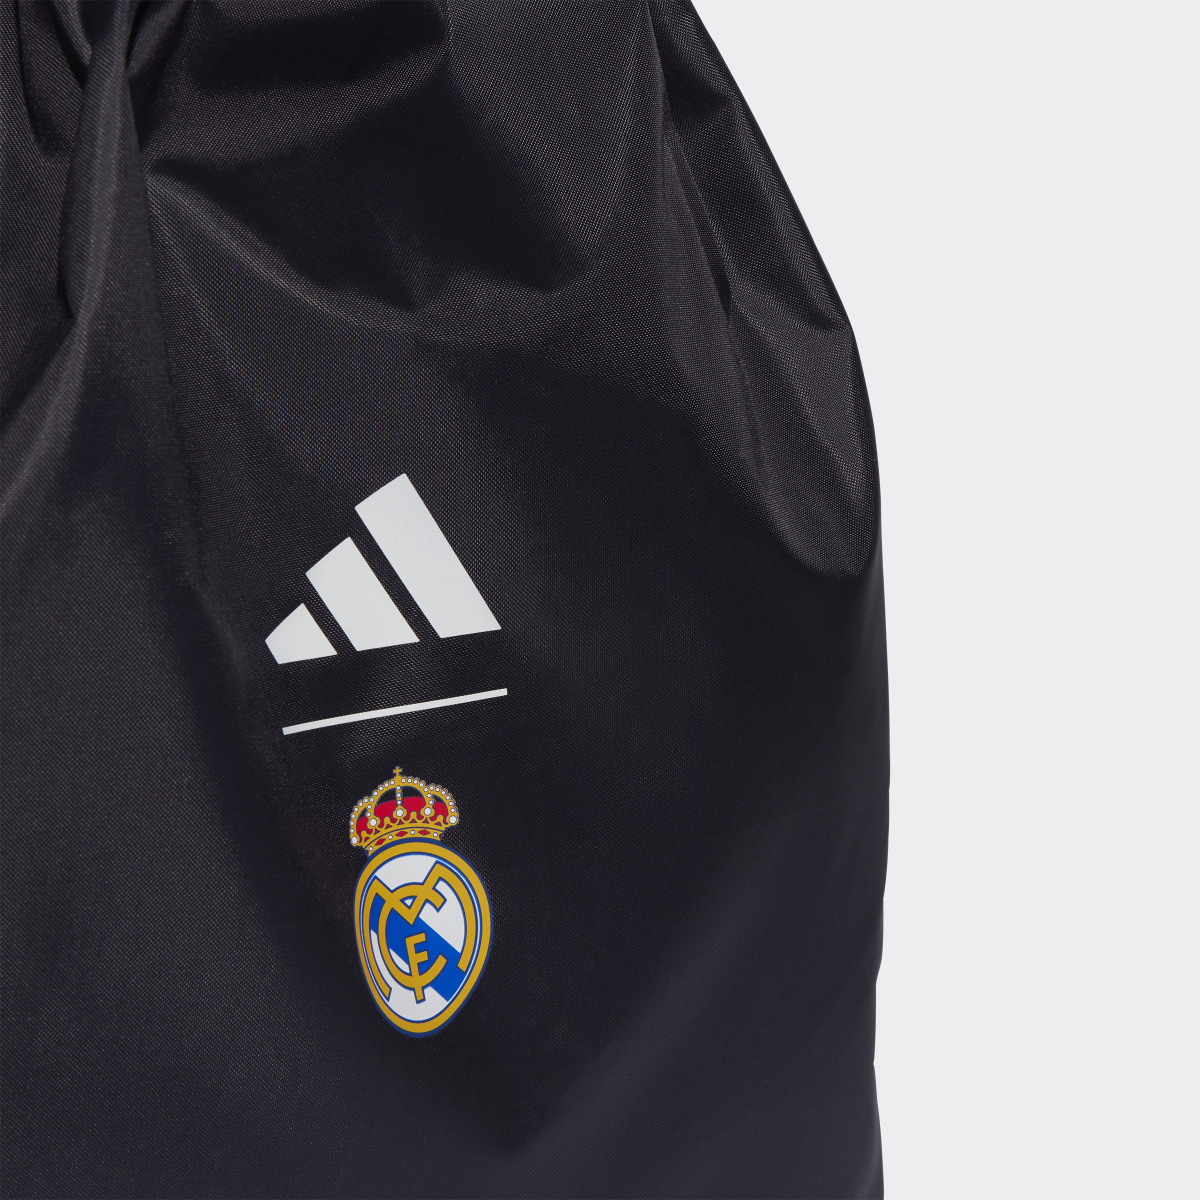 Adidas Mochila saco Real Madrid. 5